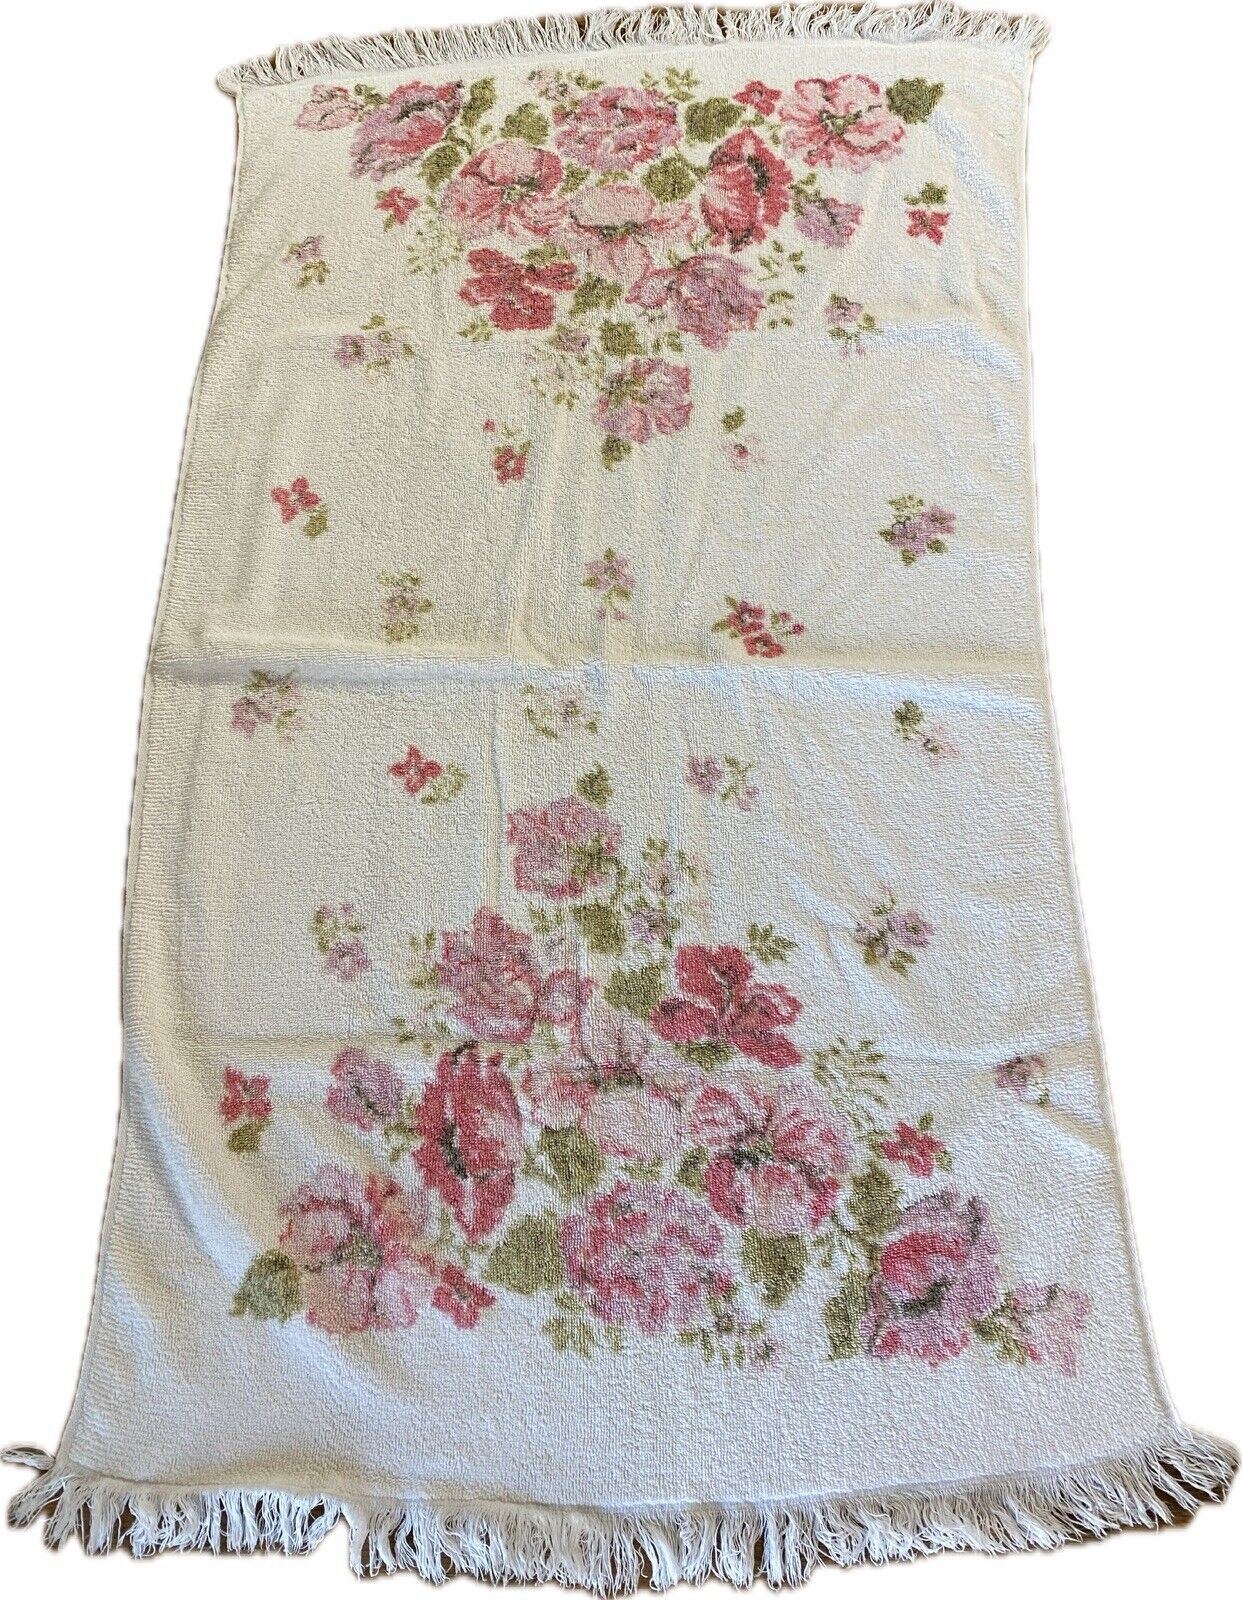 2 Vintage Stevens Utica Bath Towels Pink Roses